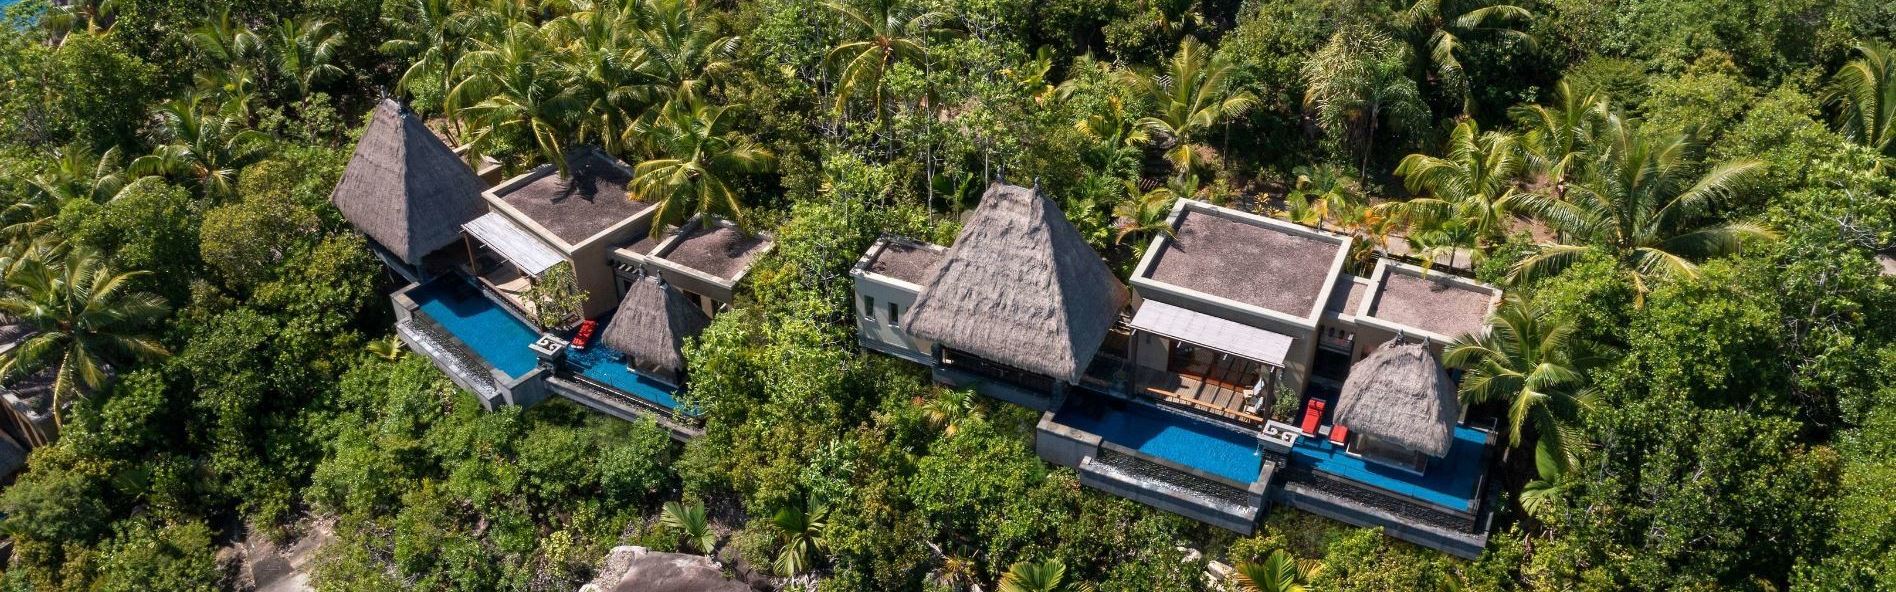 Dhigali Maldives - Luxury Holiday Destination